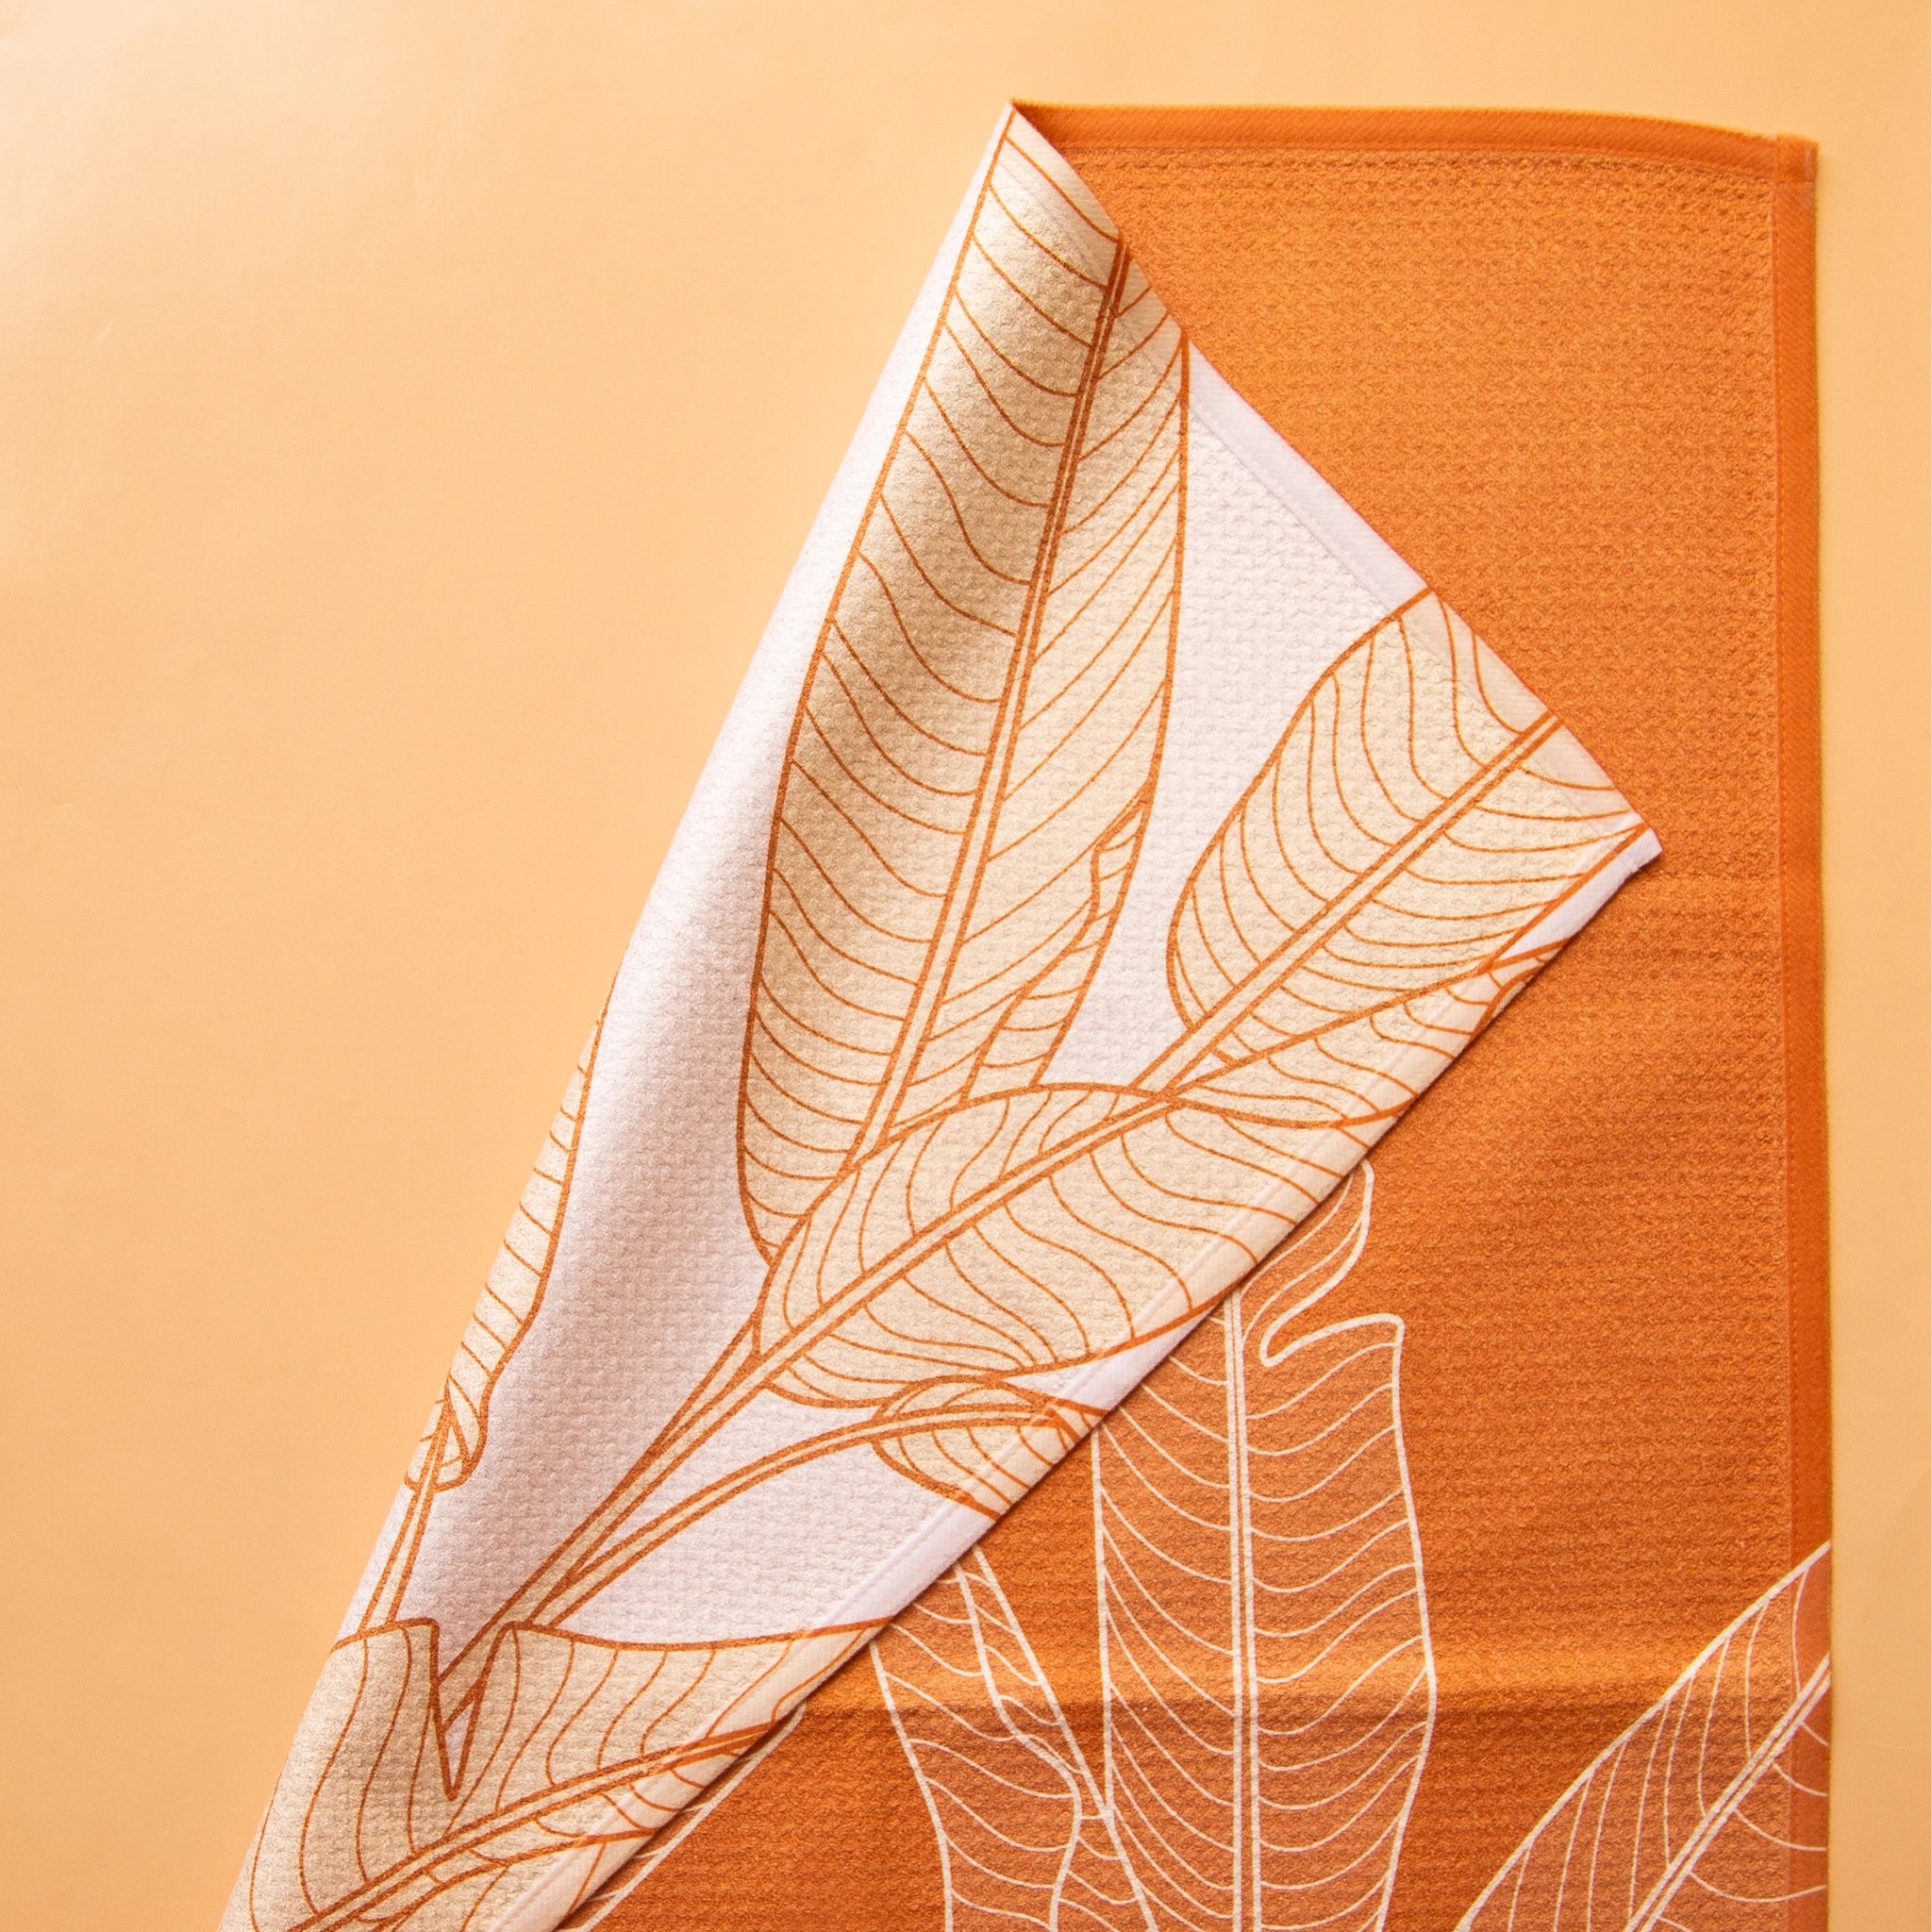 On an orange background is an orange kitchen towel with a white banana leaf design.